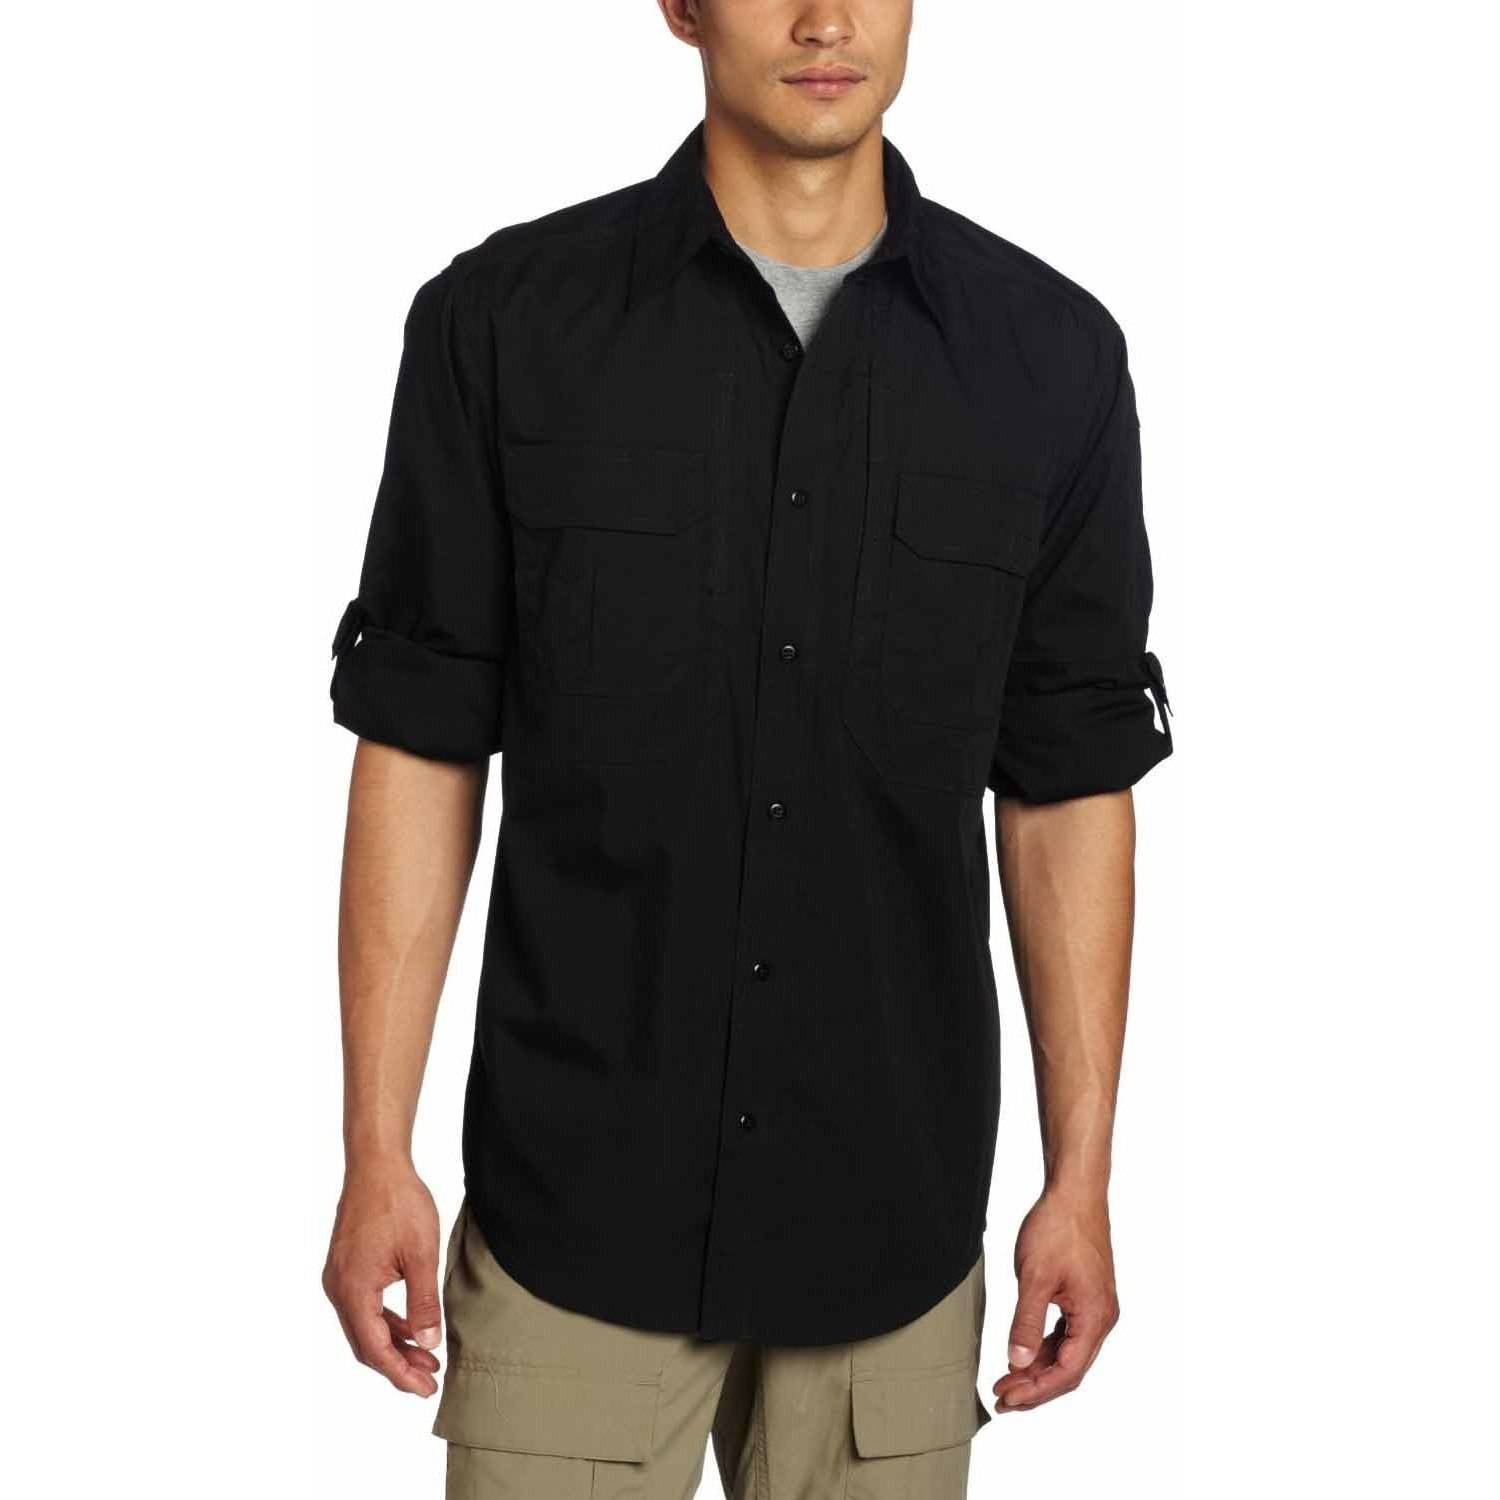 Taclite Pro Long Sleeve Shirt Tall, Black - Walmart.com